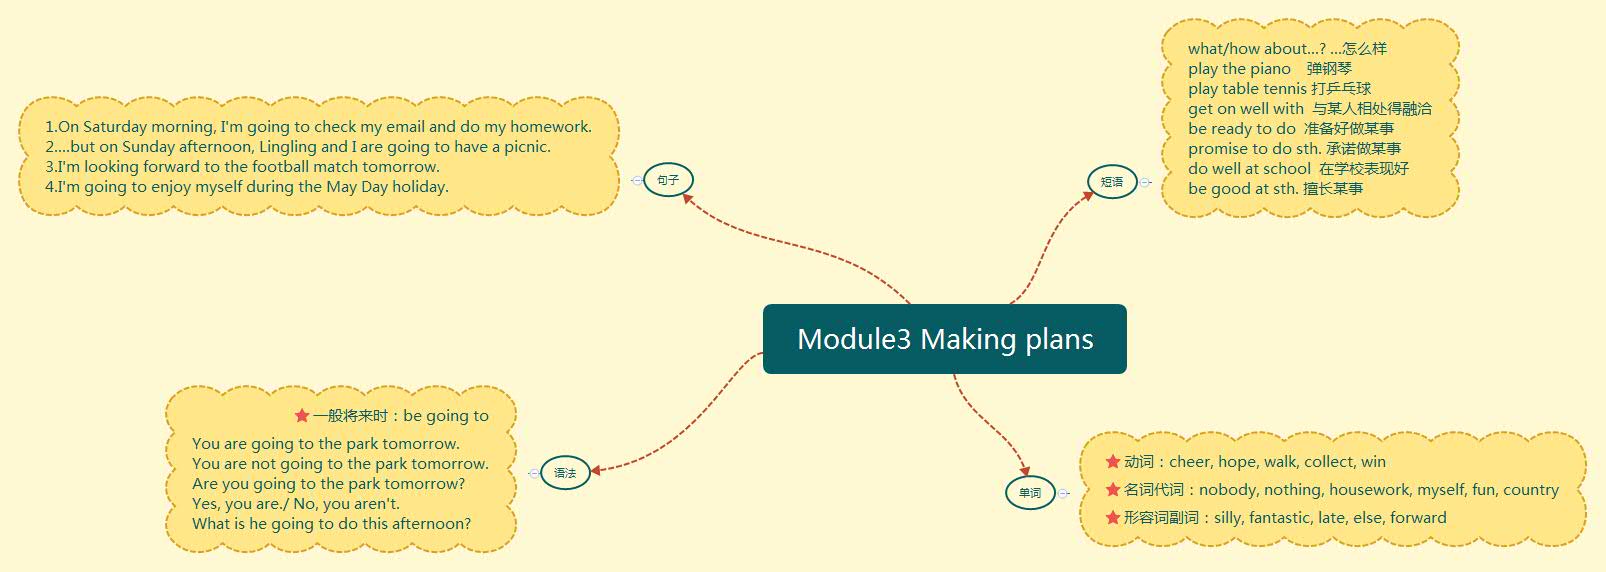 Module3 Making plans.jpg